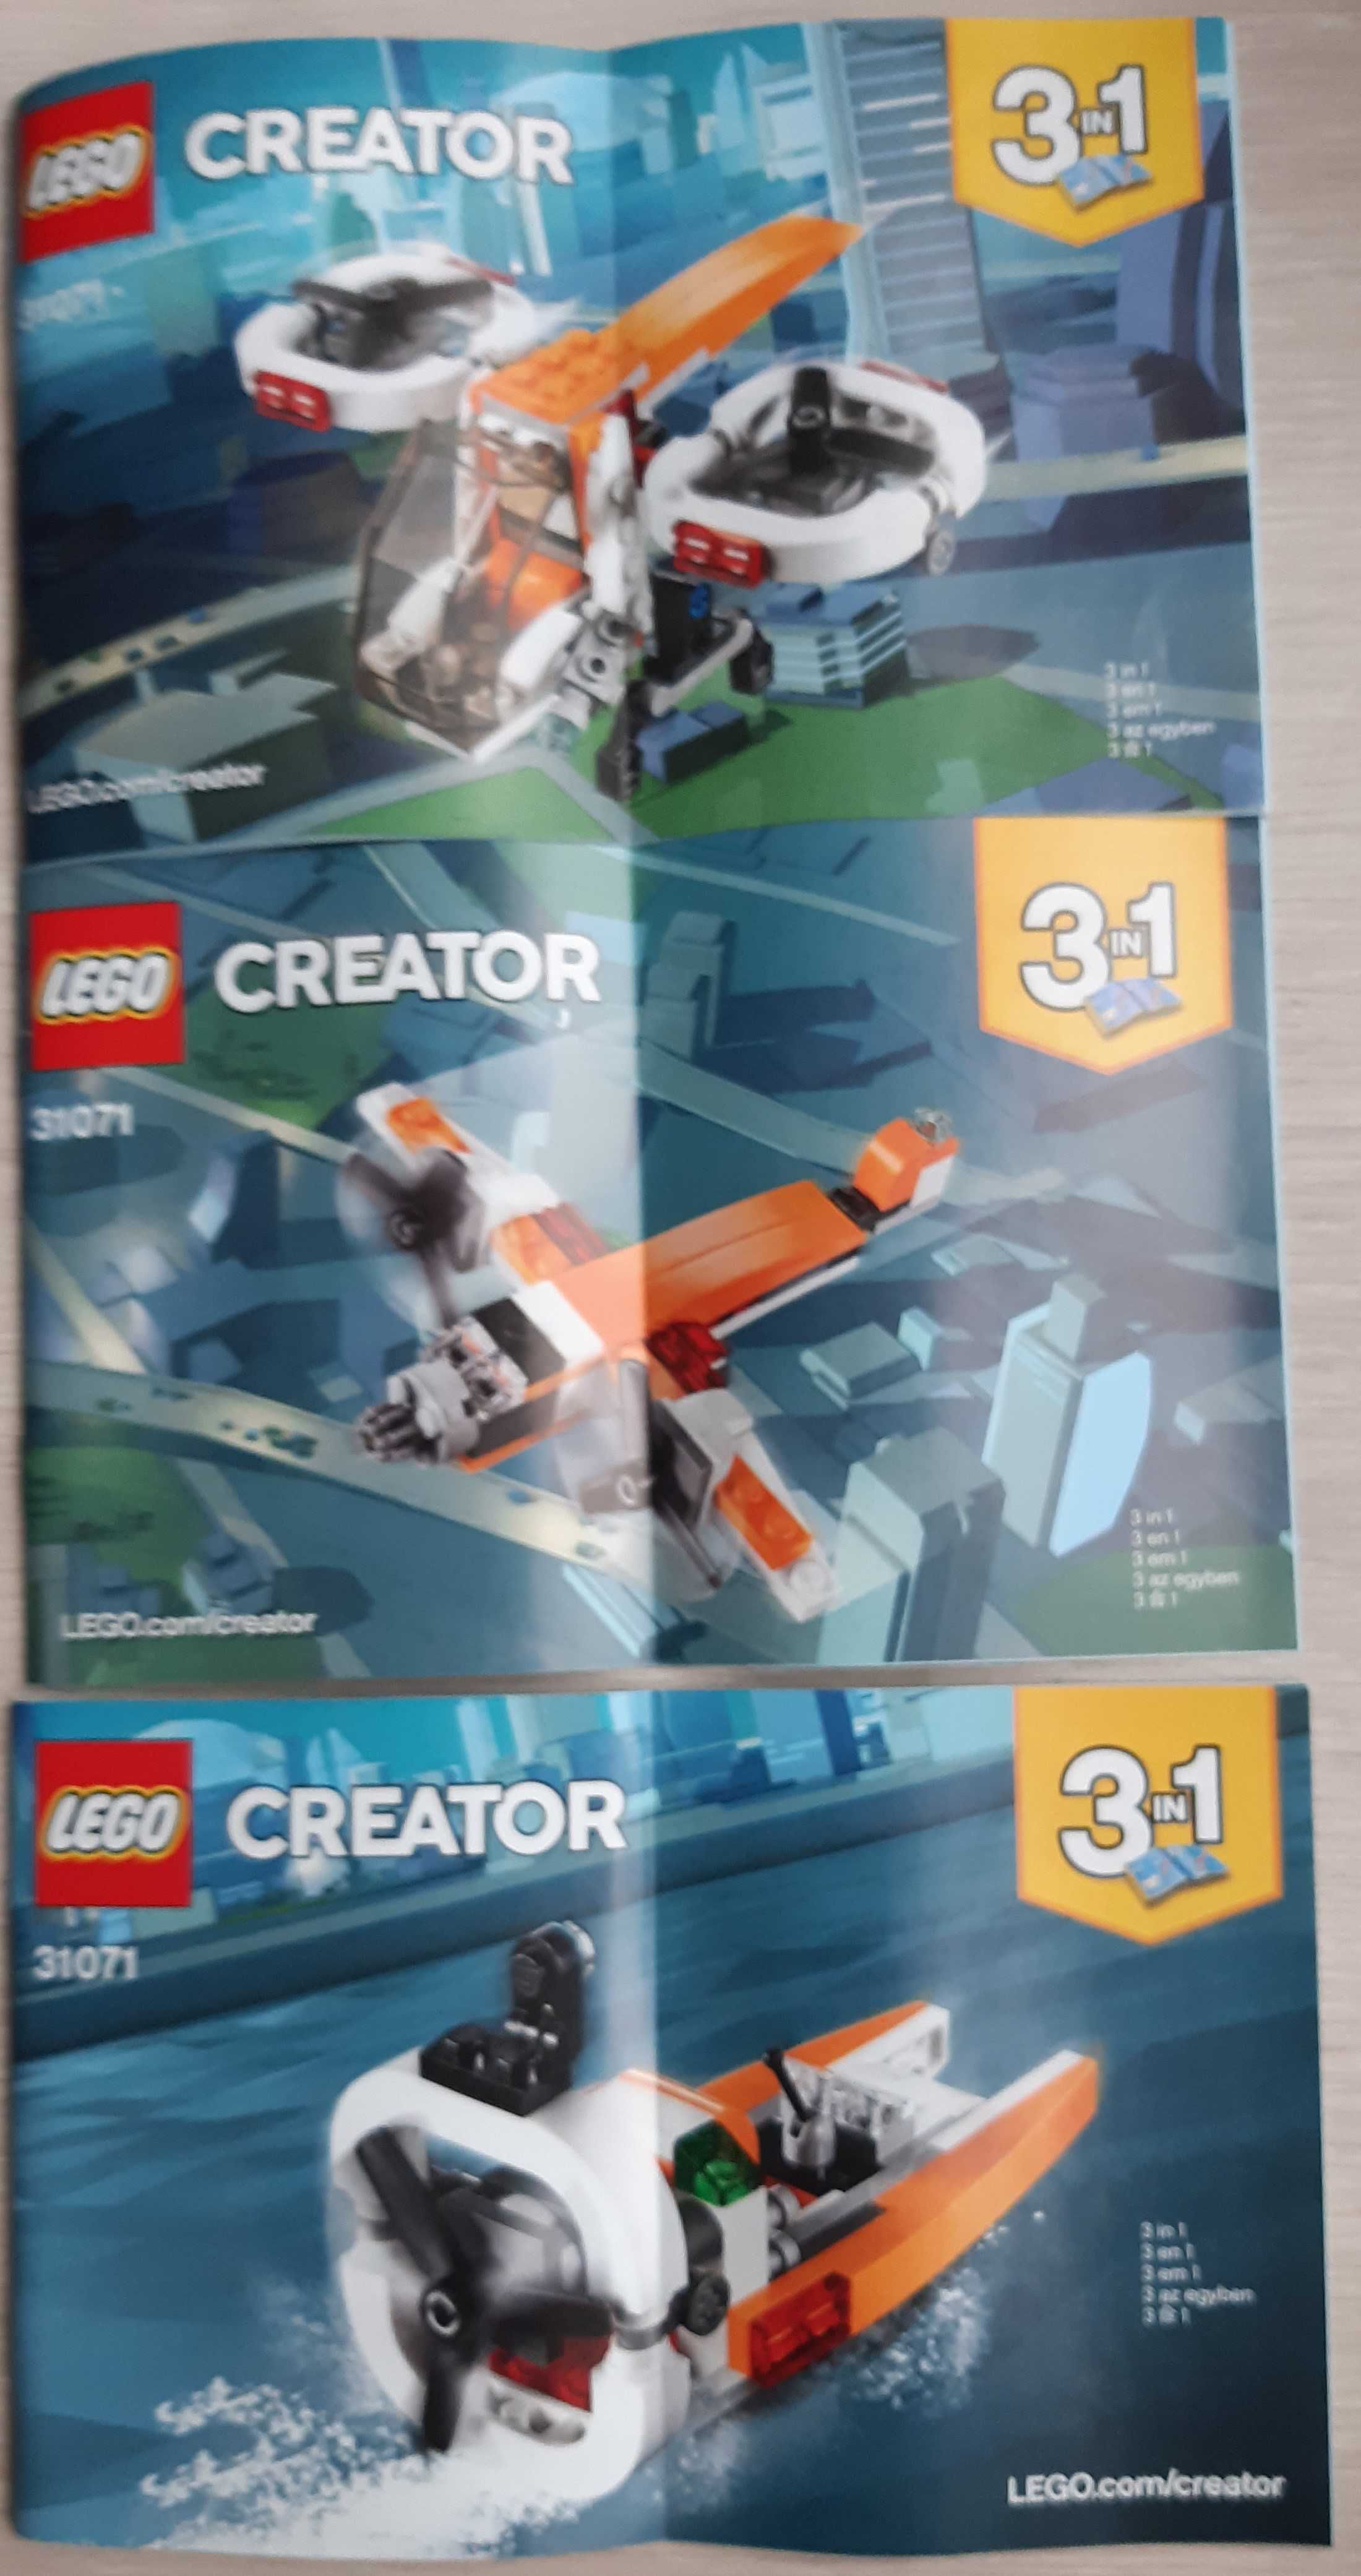 Lego CREATOR 31071 - Dron Explorer